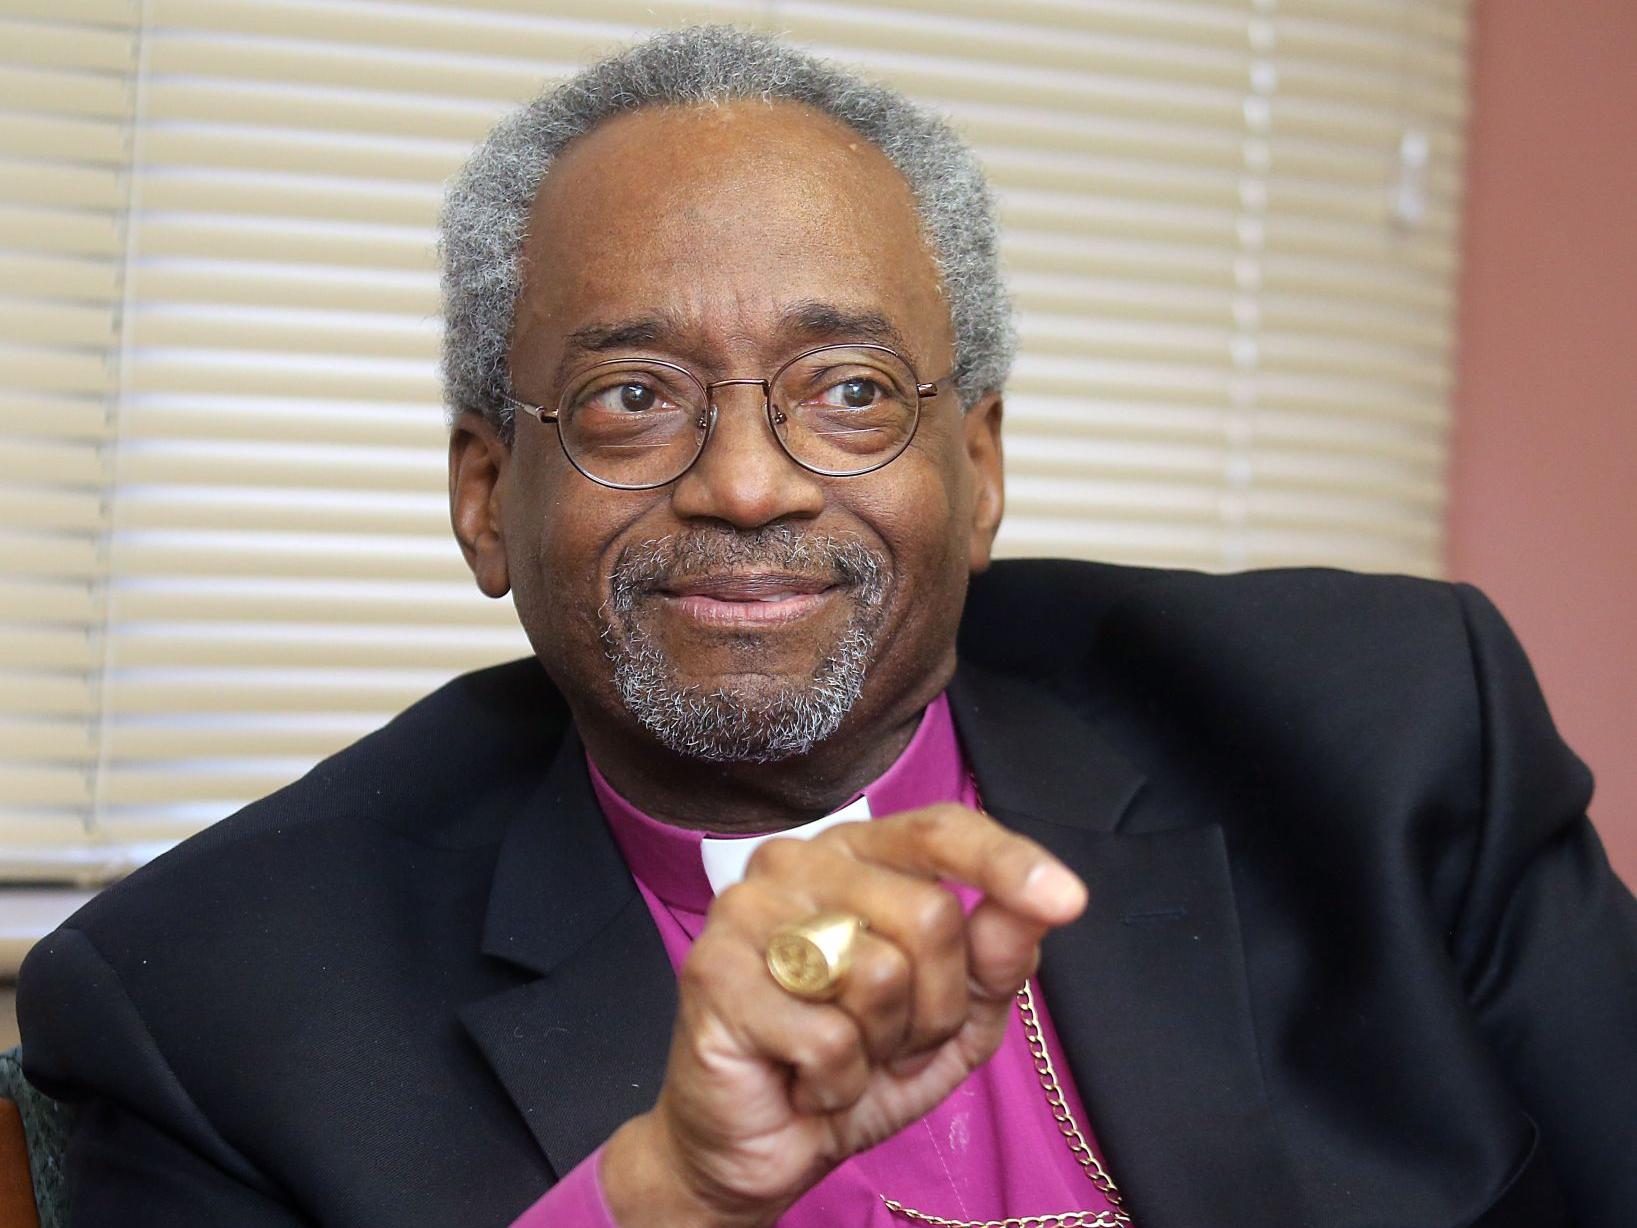 Buffalo-born bishop now leads U.S. Episcopal Church